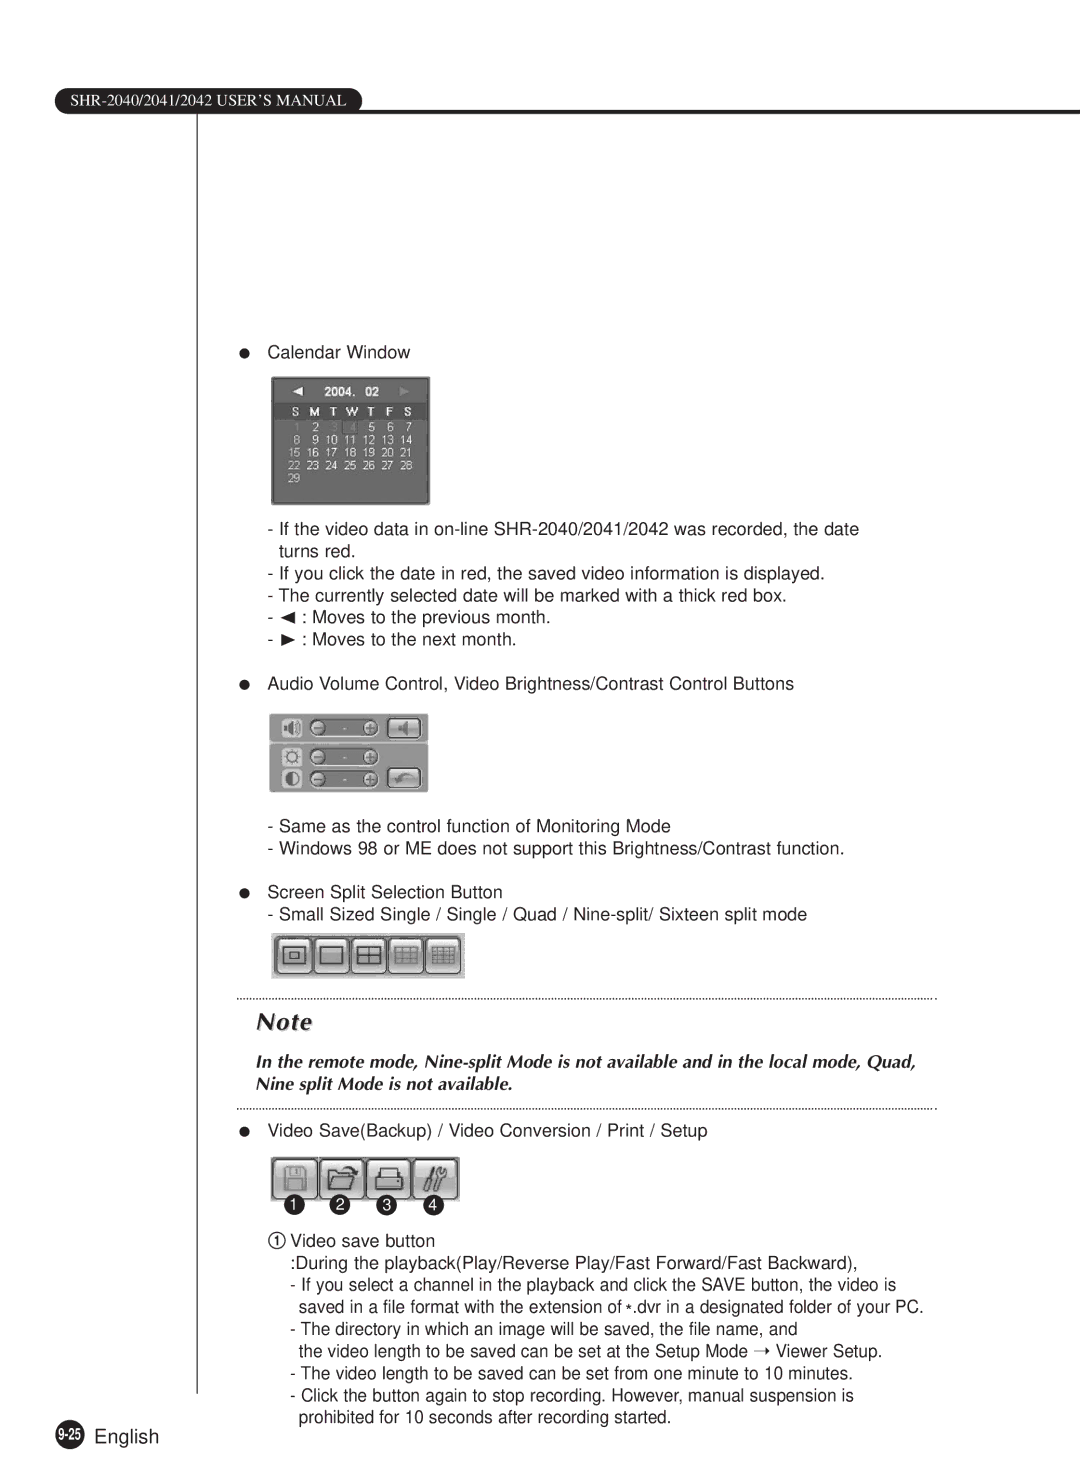 Samsung SHR-2040N, SHR-2040P manual 25English 